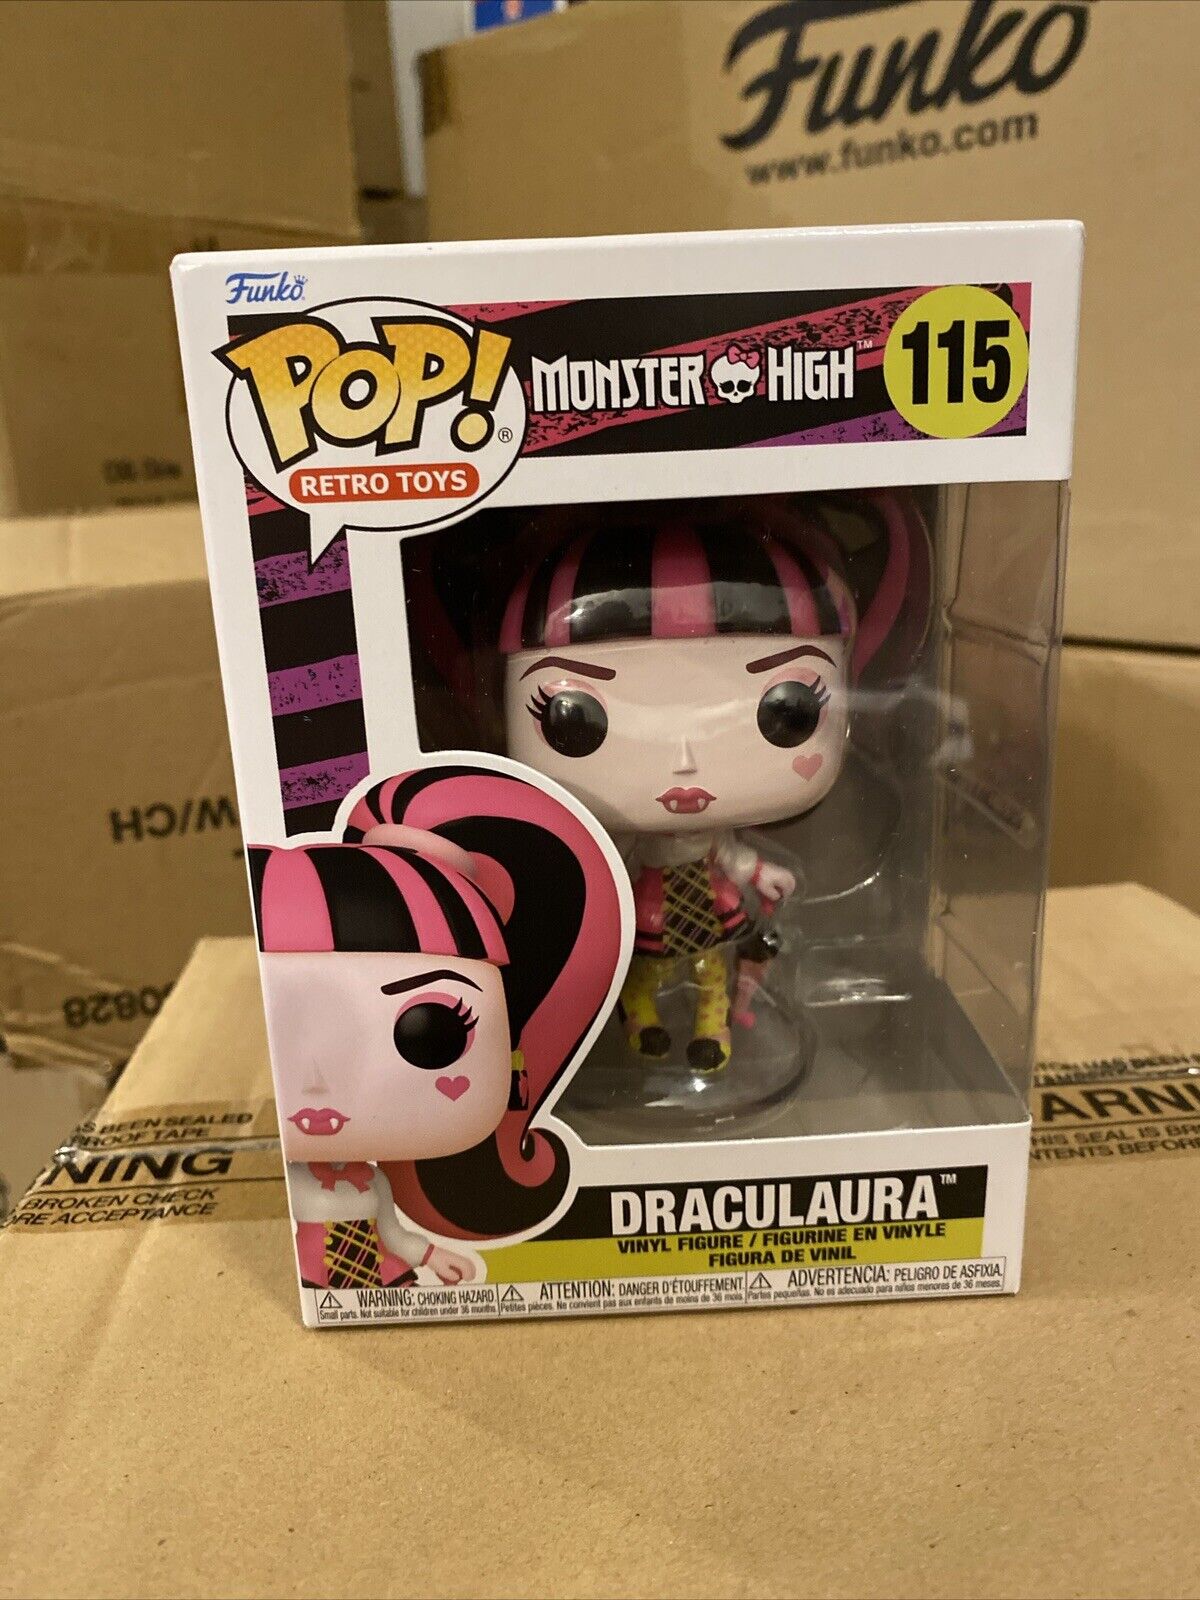 Monster High Draculaura Funko Pop Vinyl Figure #115 - Mint - Ships Now